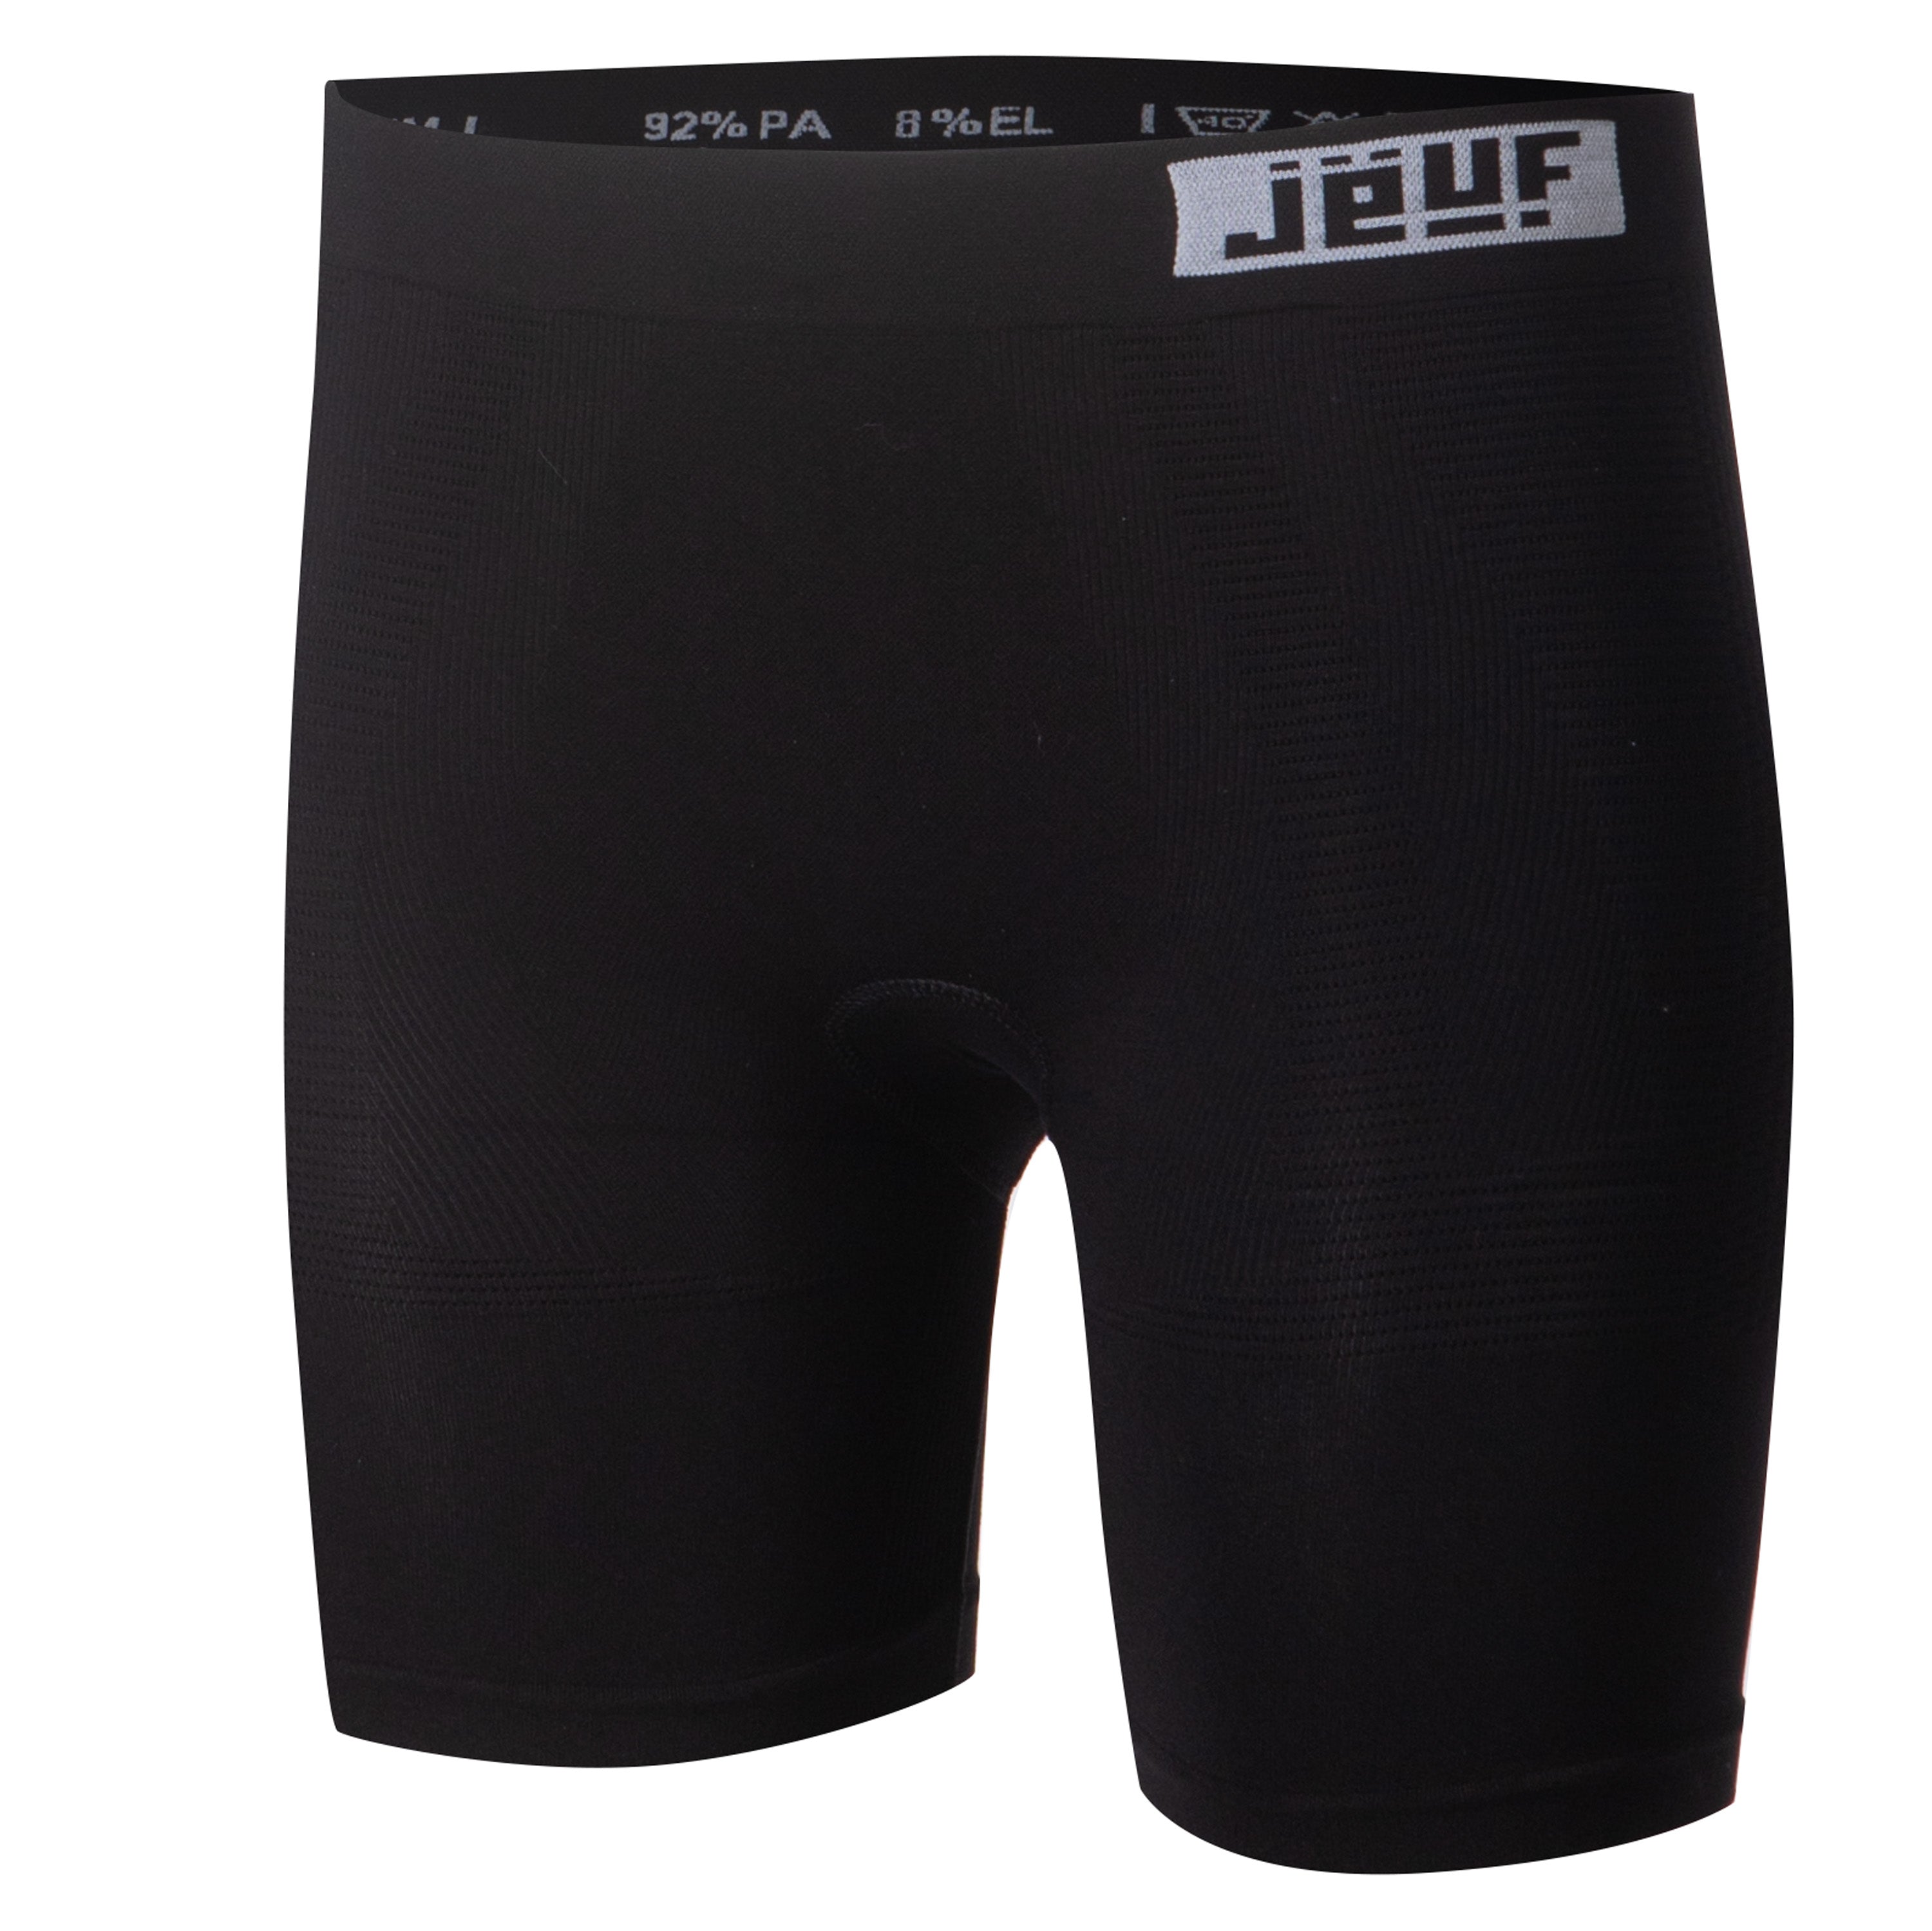 Jëuf Essential women's underwear boxer shorts with pad - Black